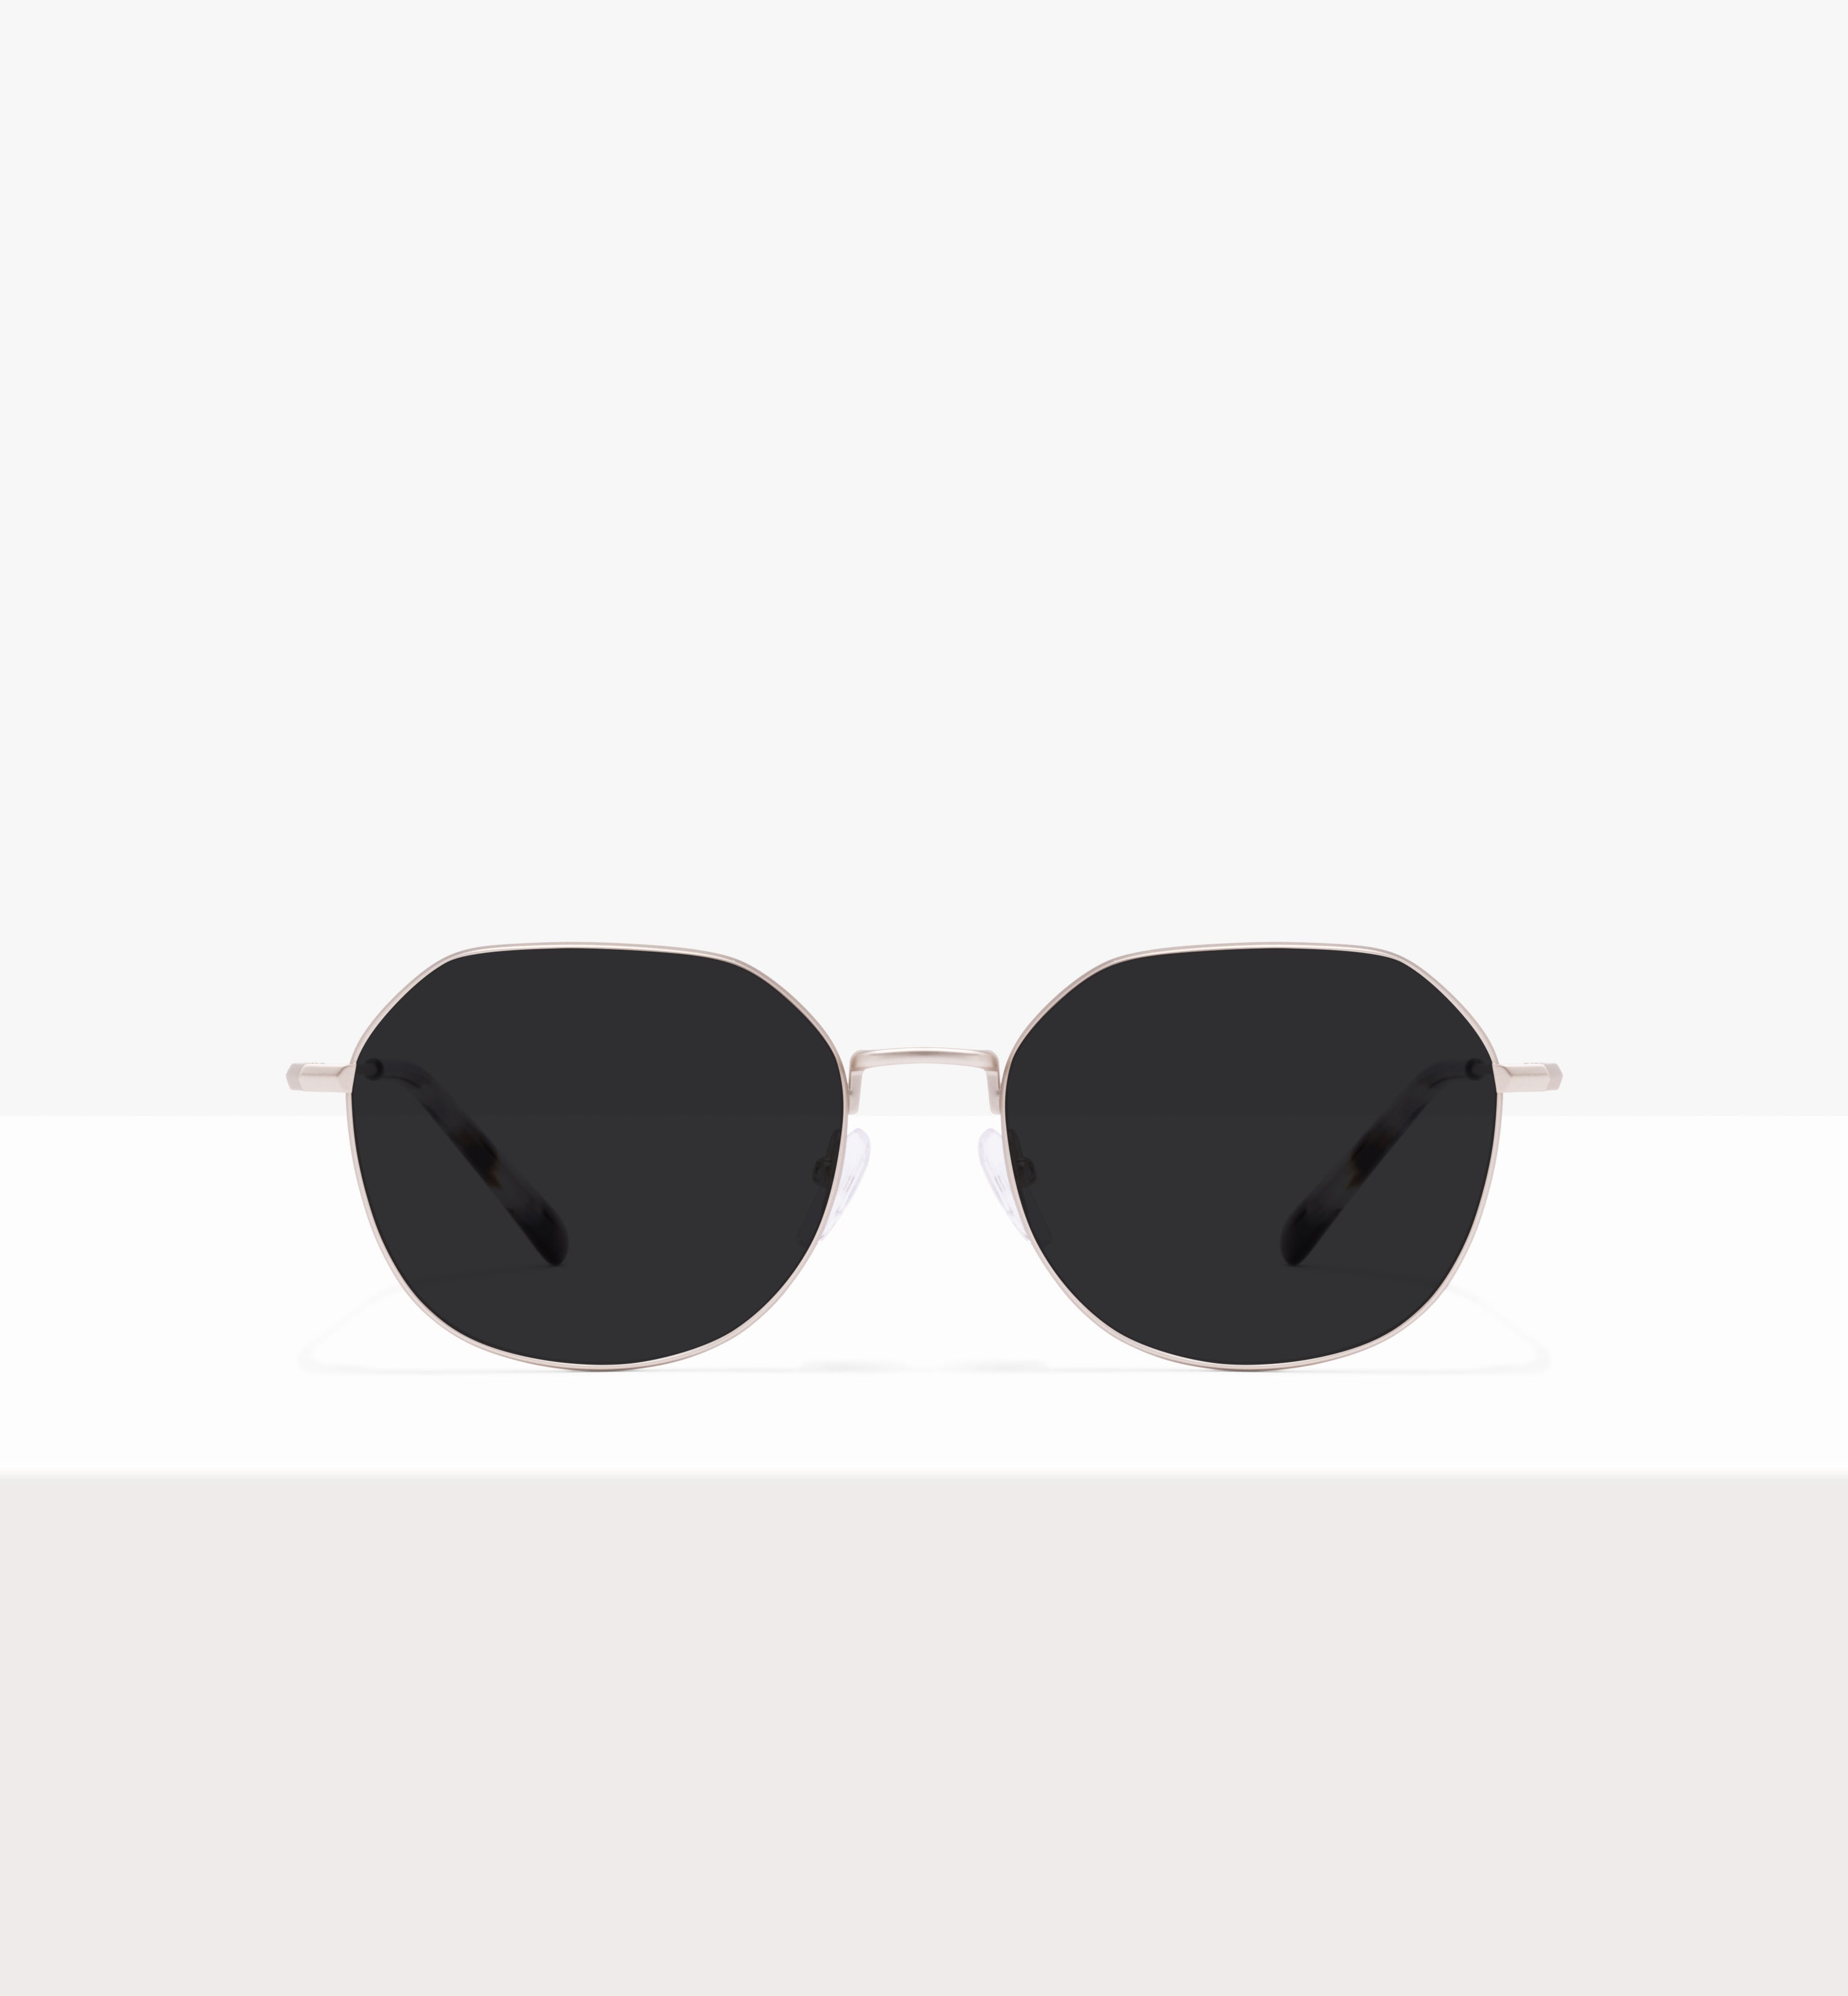 Prescription Glasses, Sunglasses & Contacts